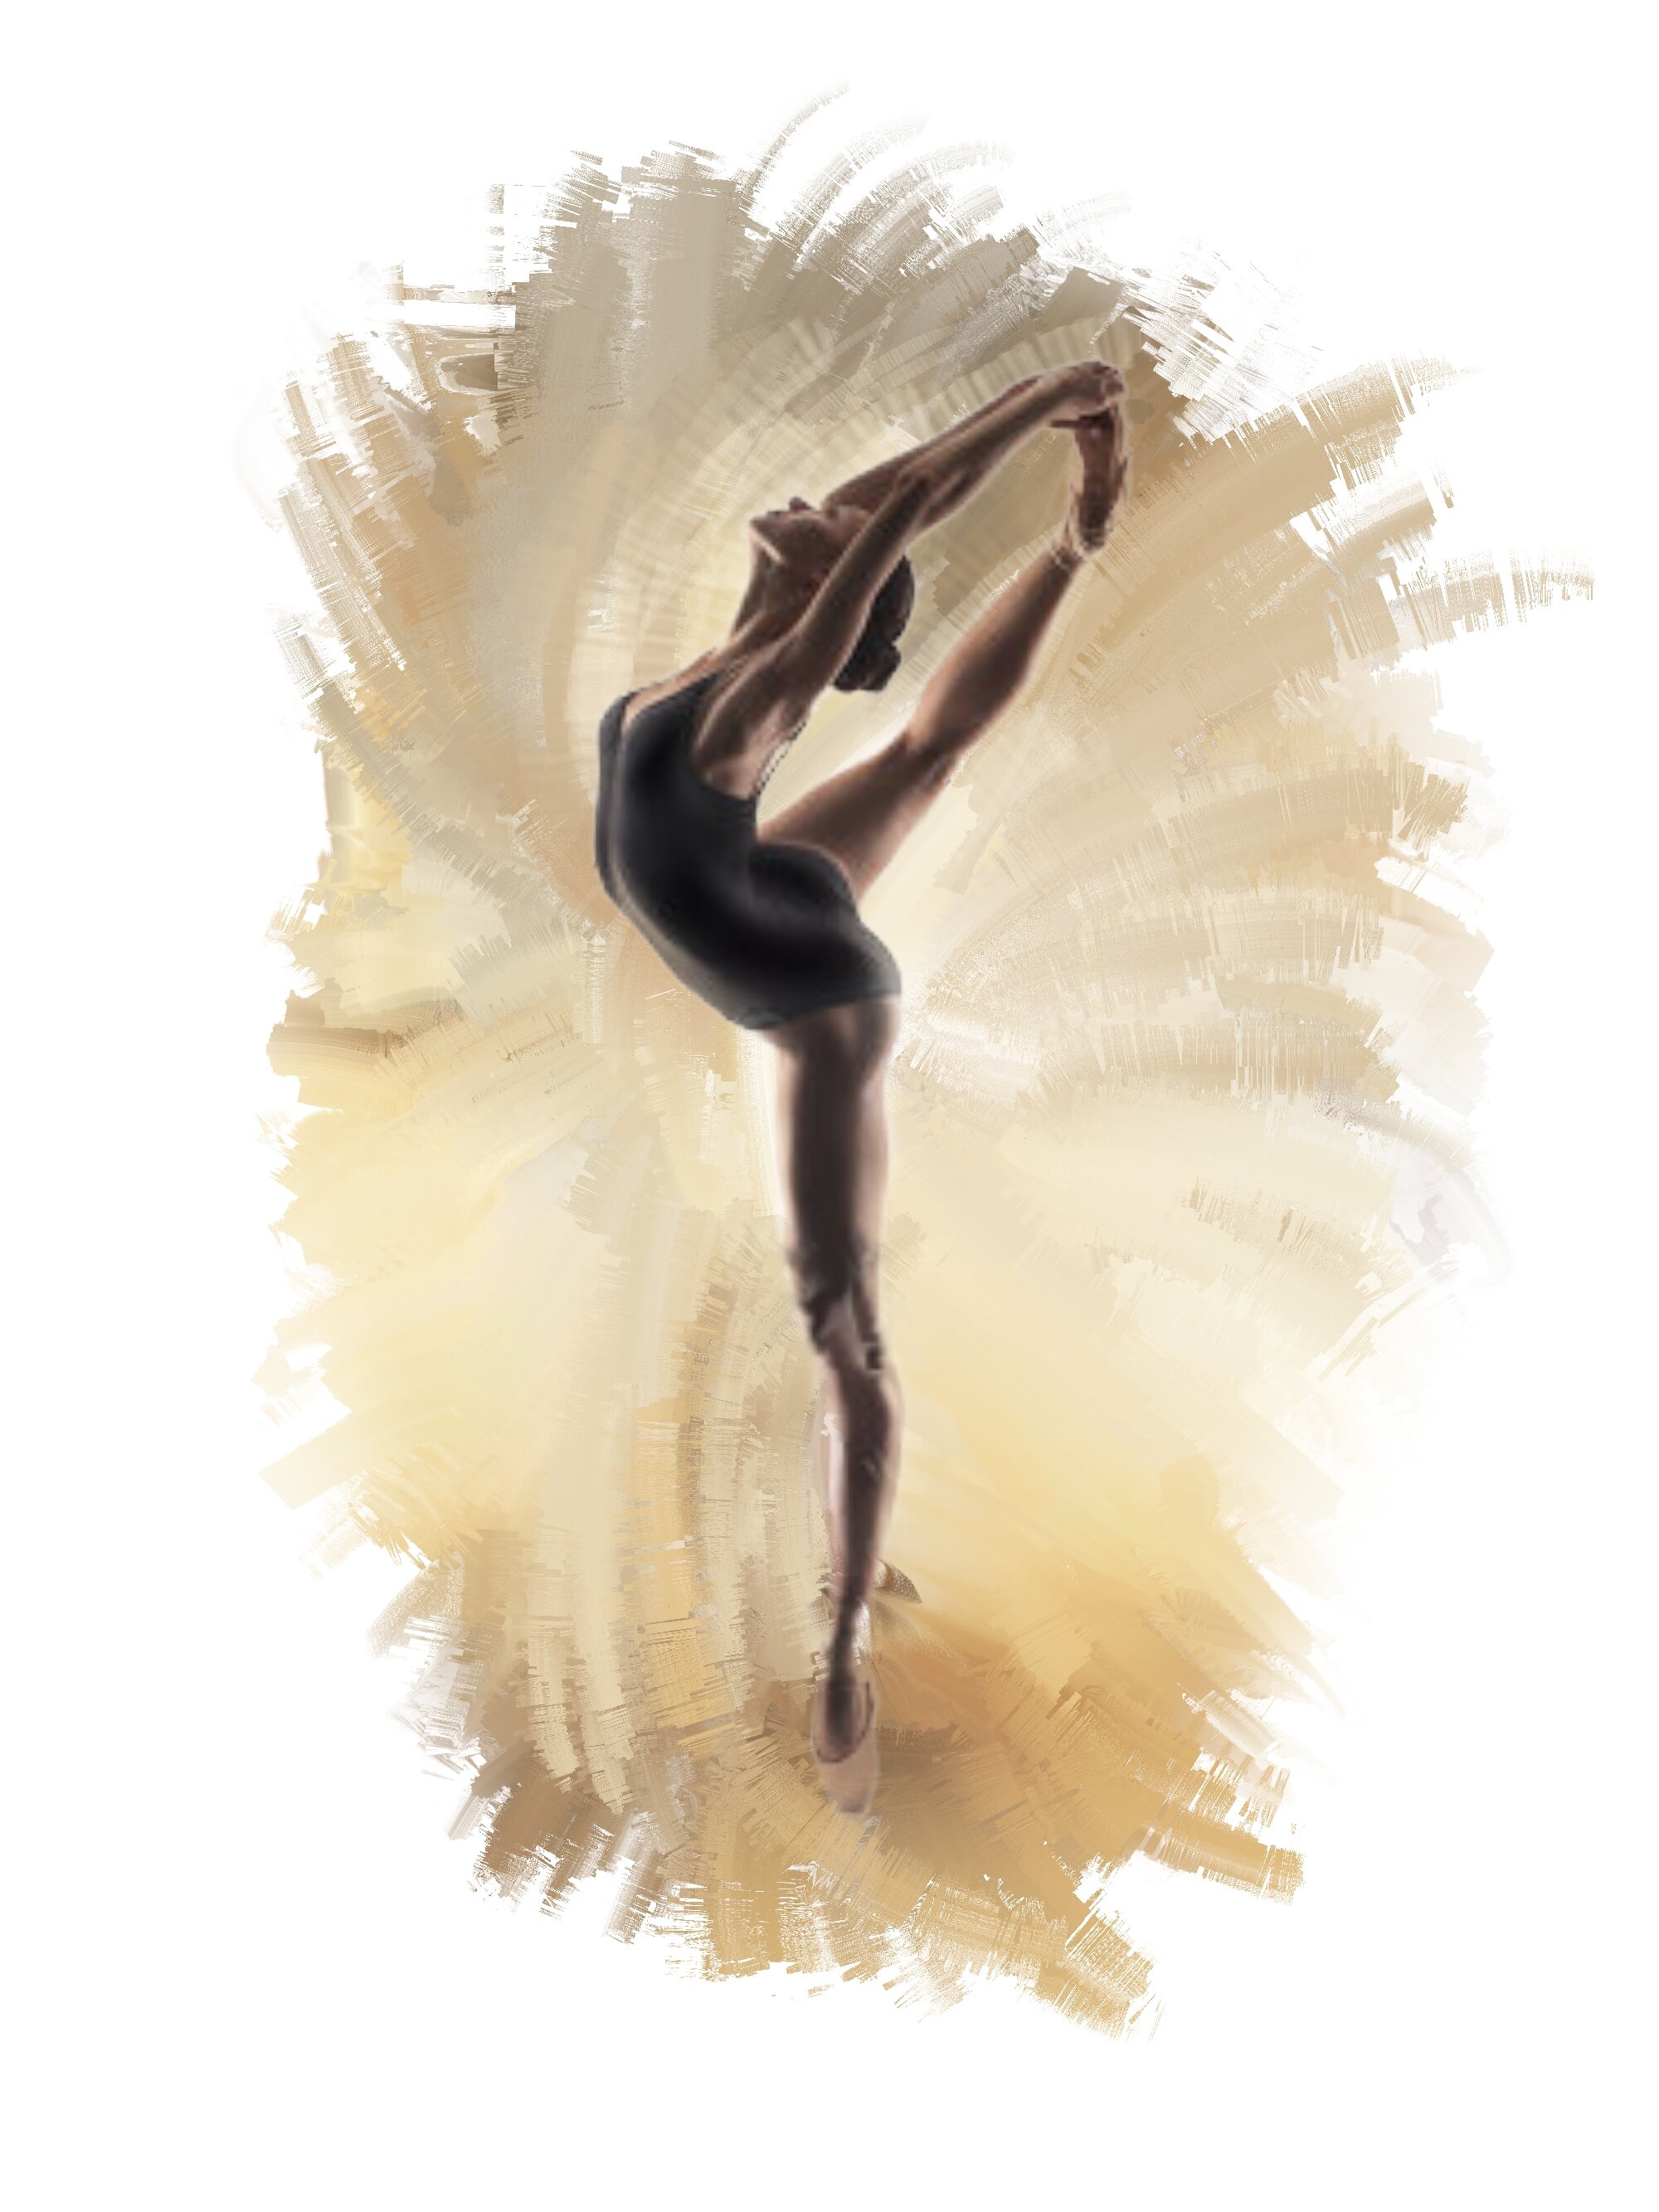 Ballet Dancer 2